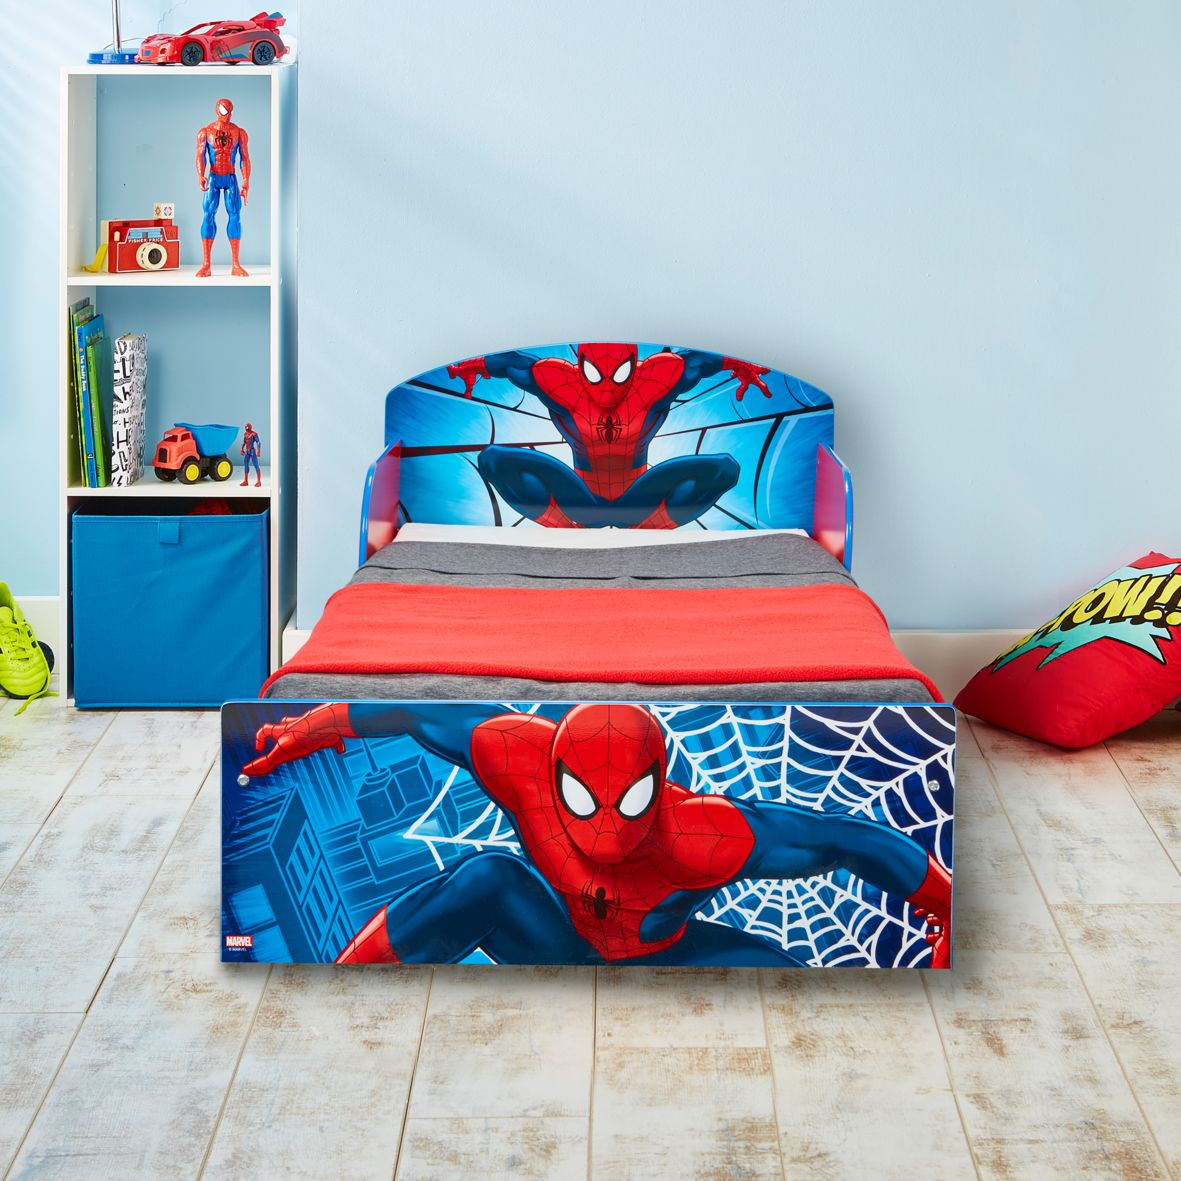 Cama Spiderman infantil - Bainba Blog